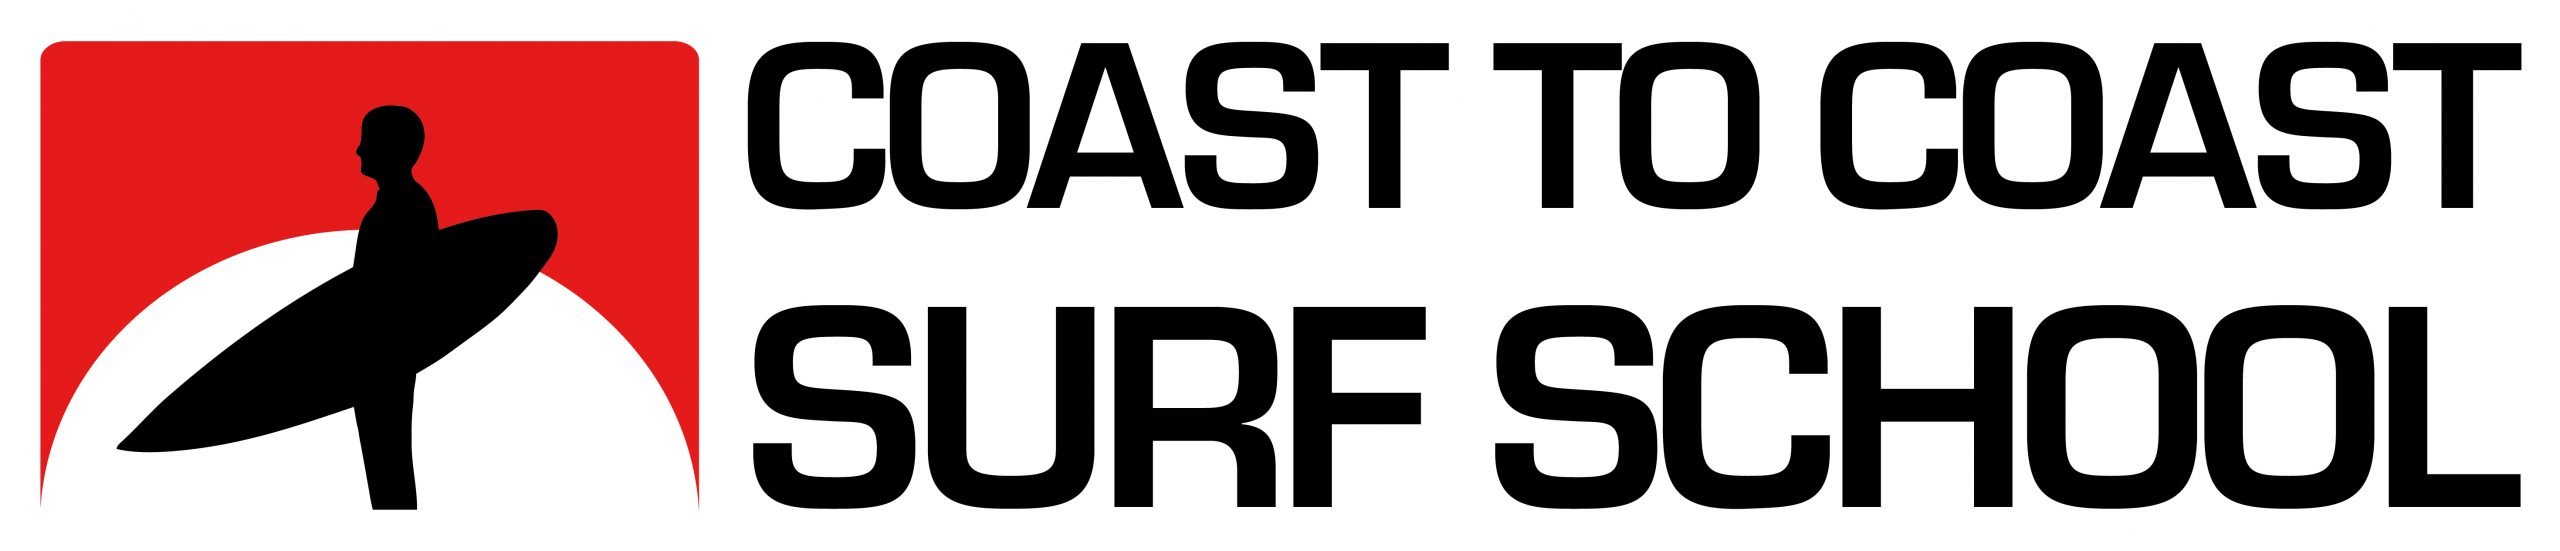 Coast To Coast Surf School logo